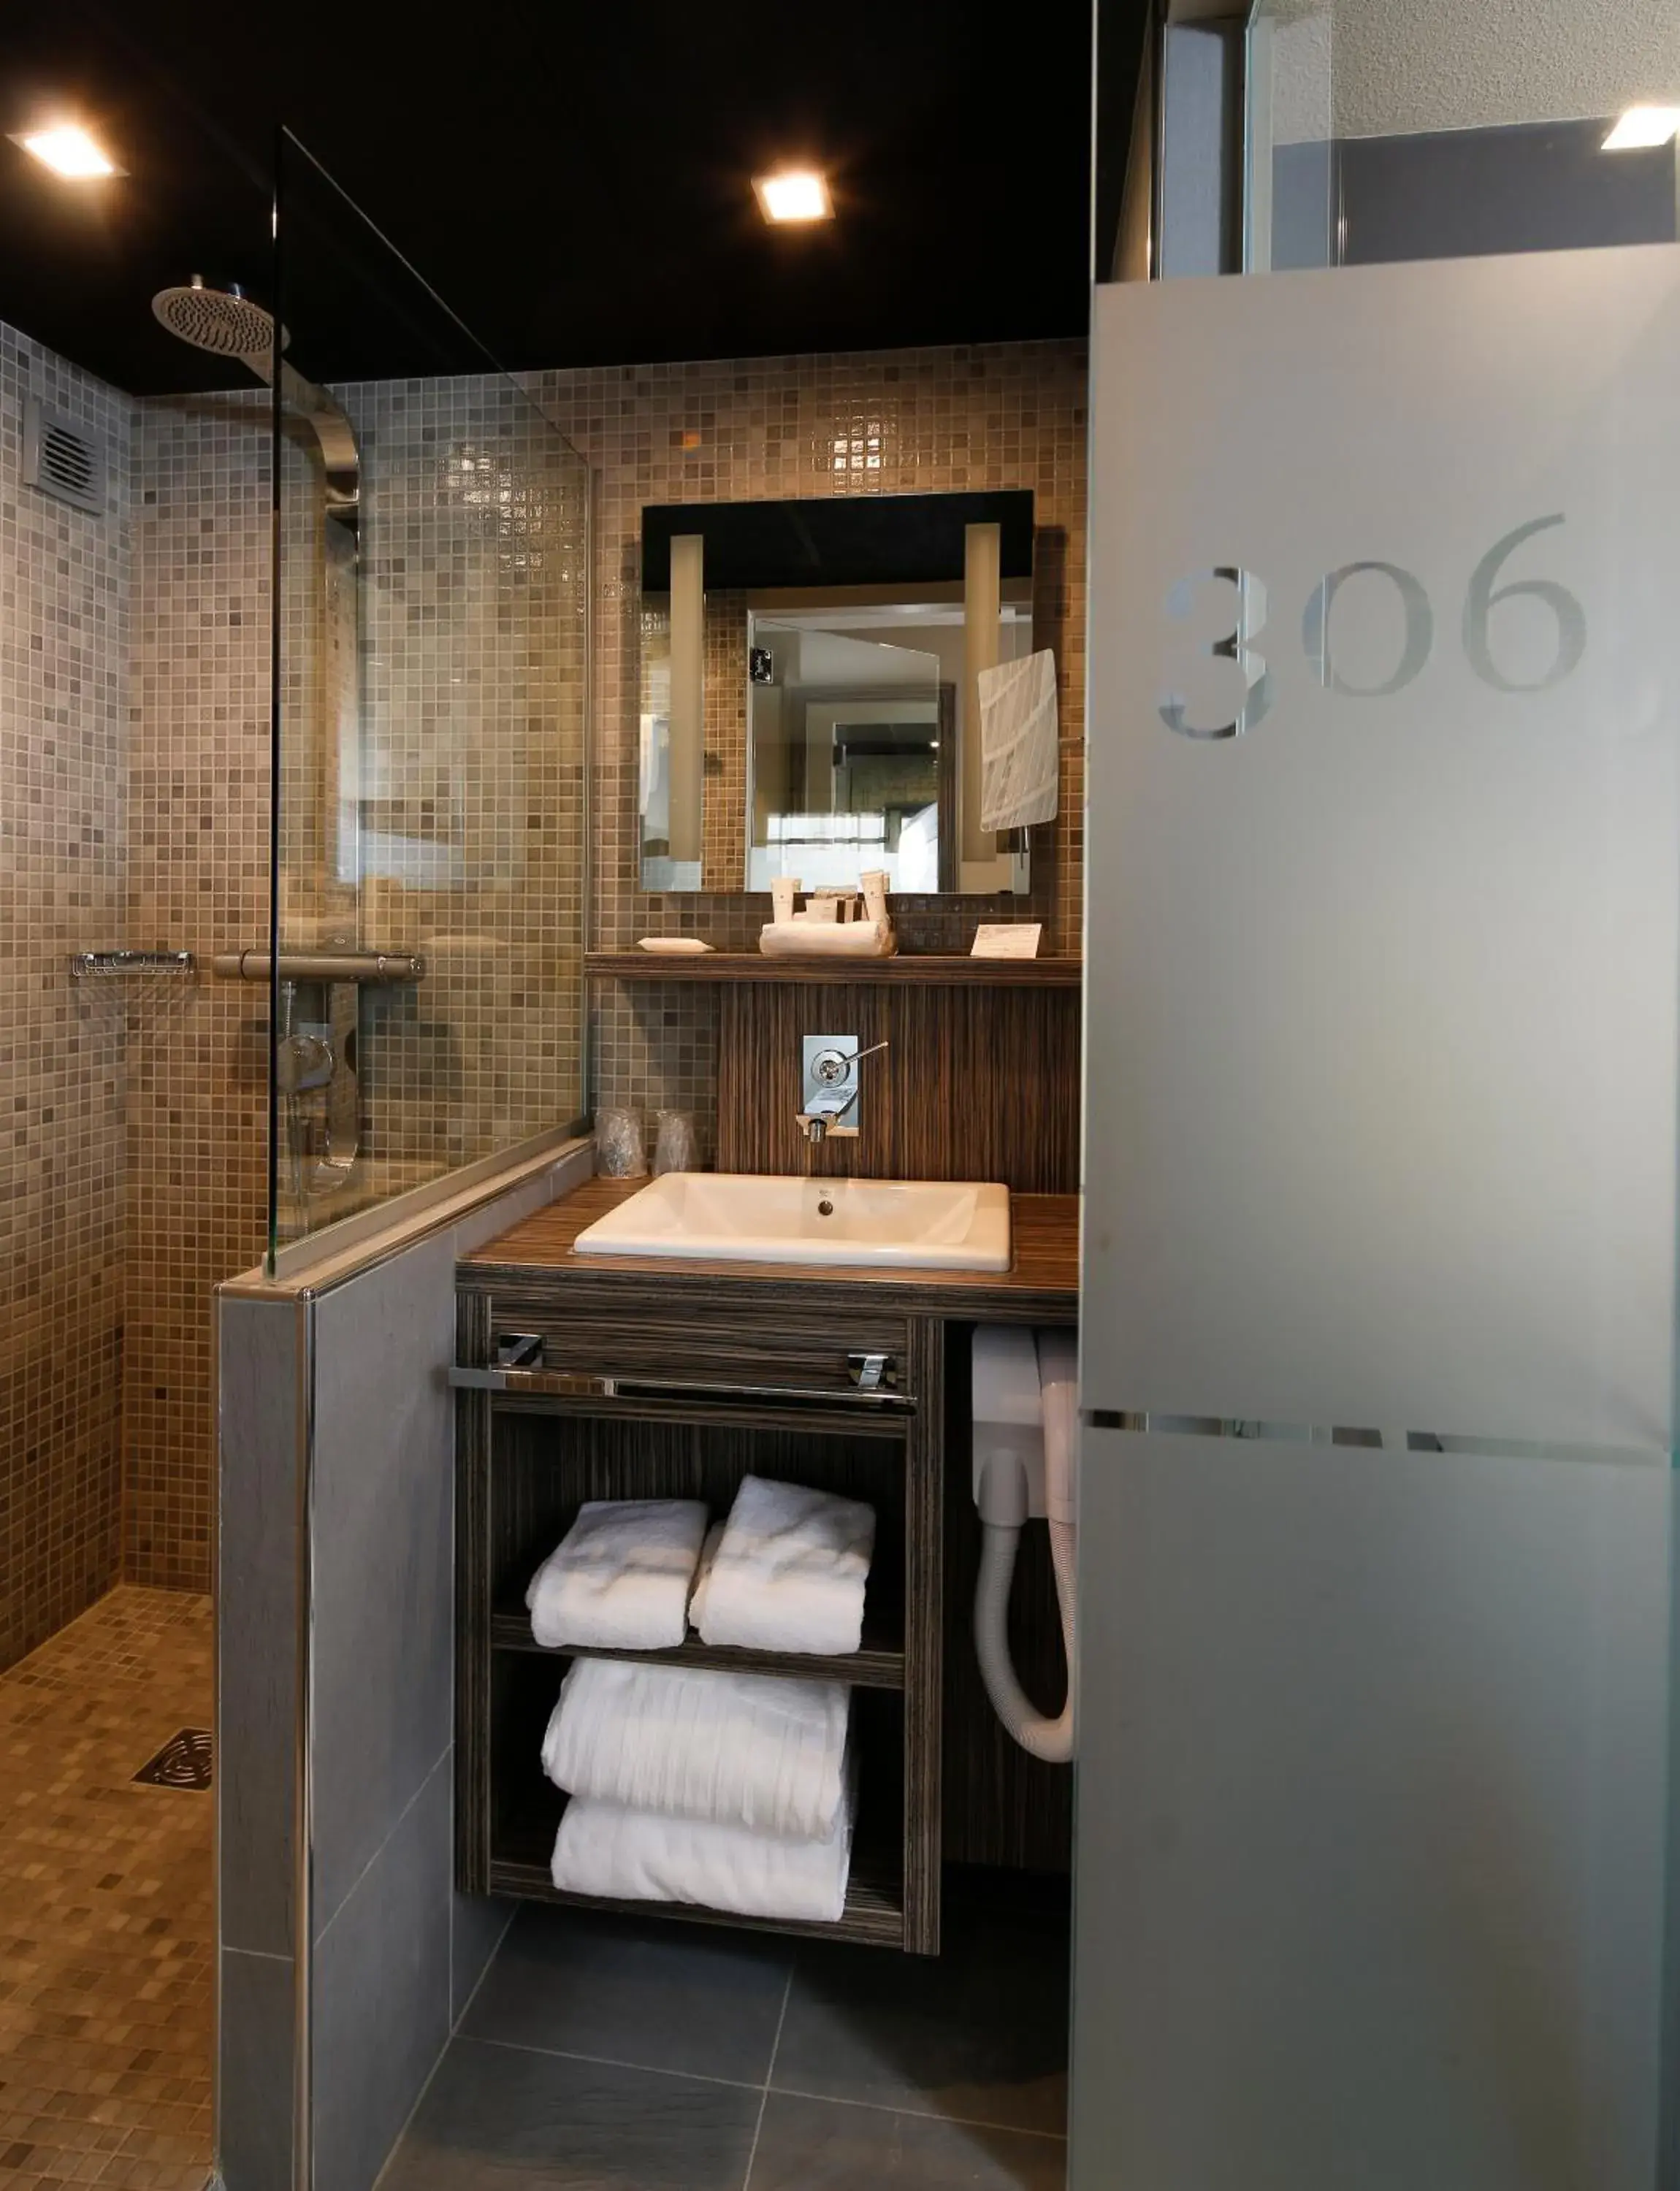 Bathroom in Hôtel de Brienne